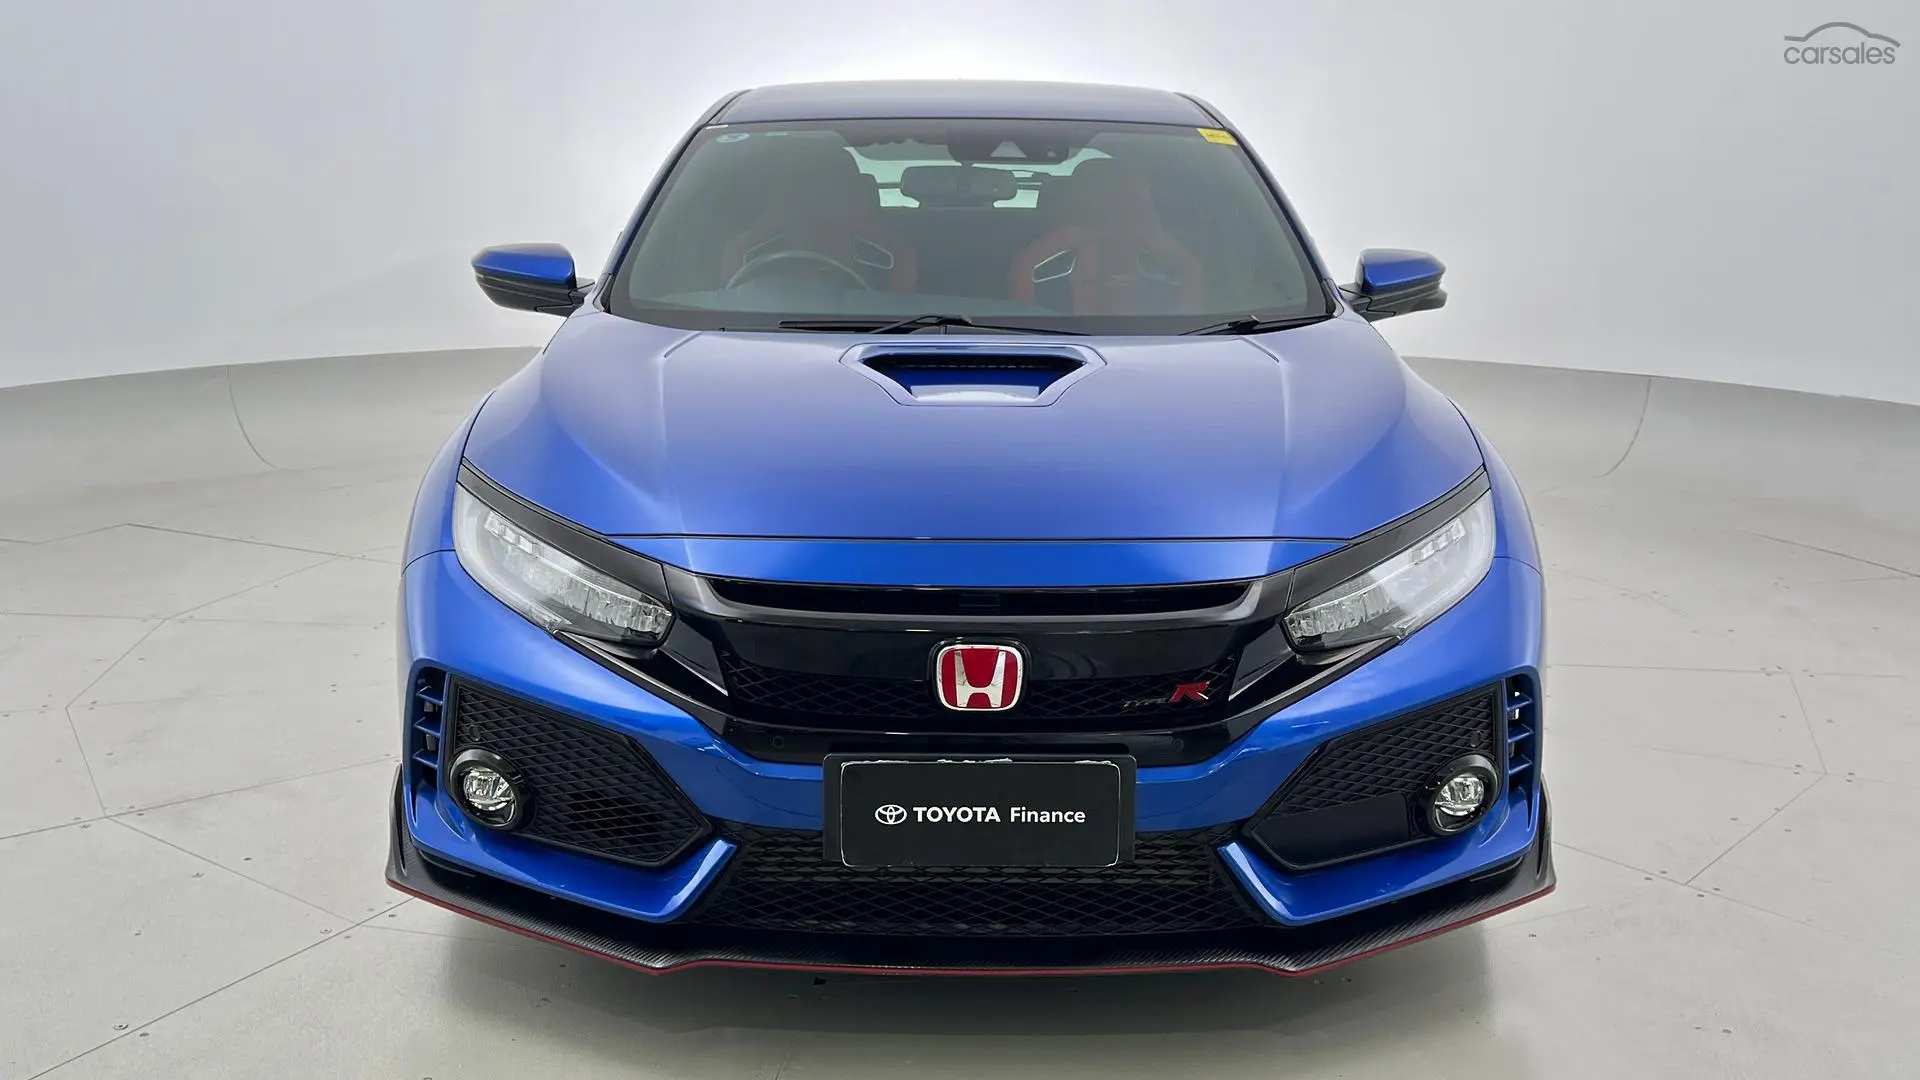 2018 Honda Civic Image 10